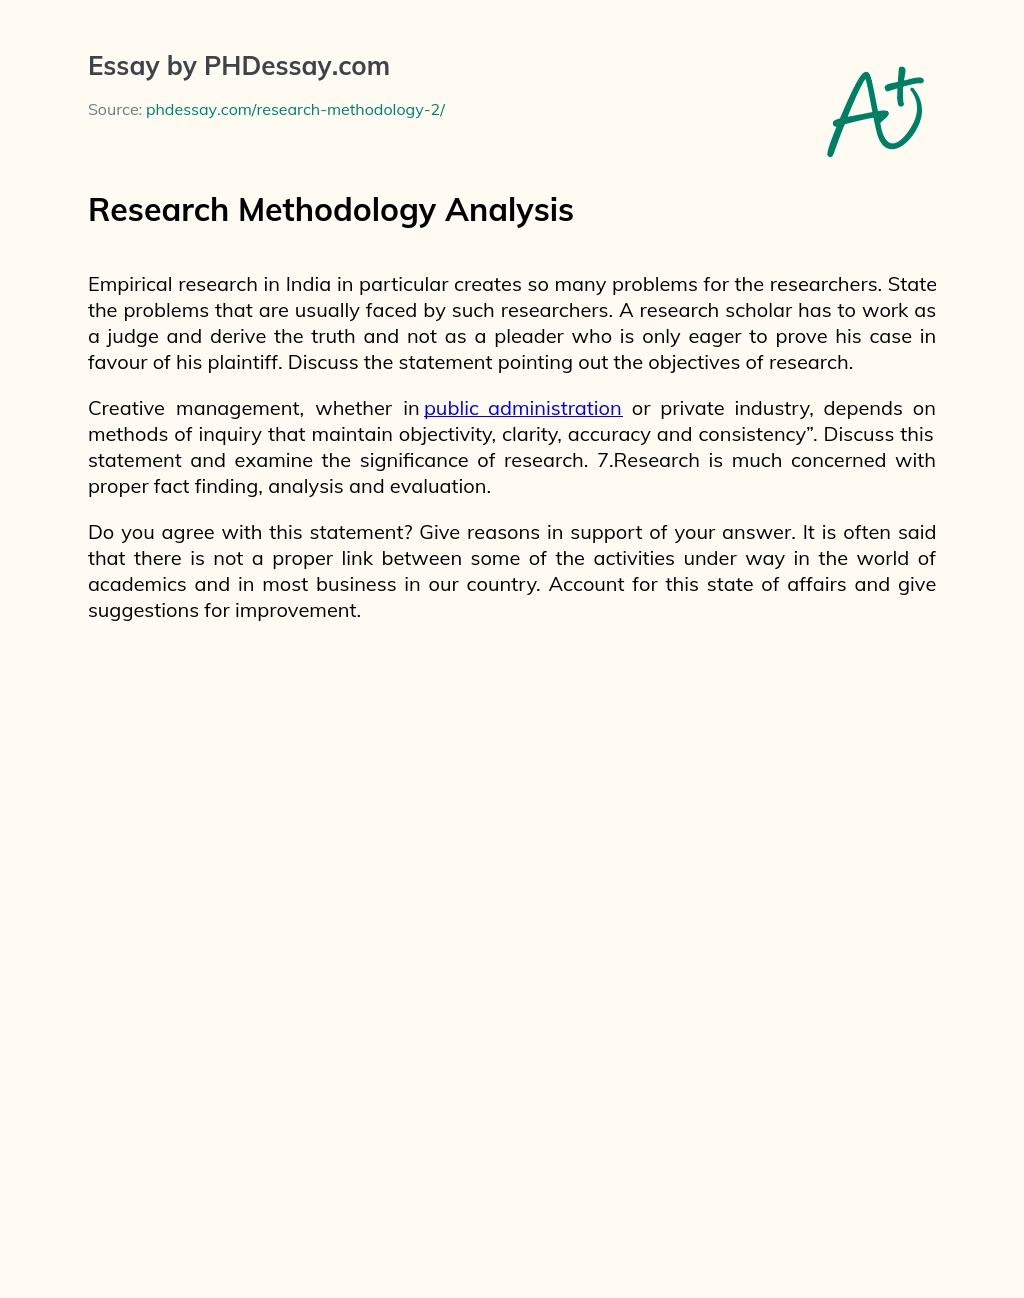 Research Methodology Analysis essay